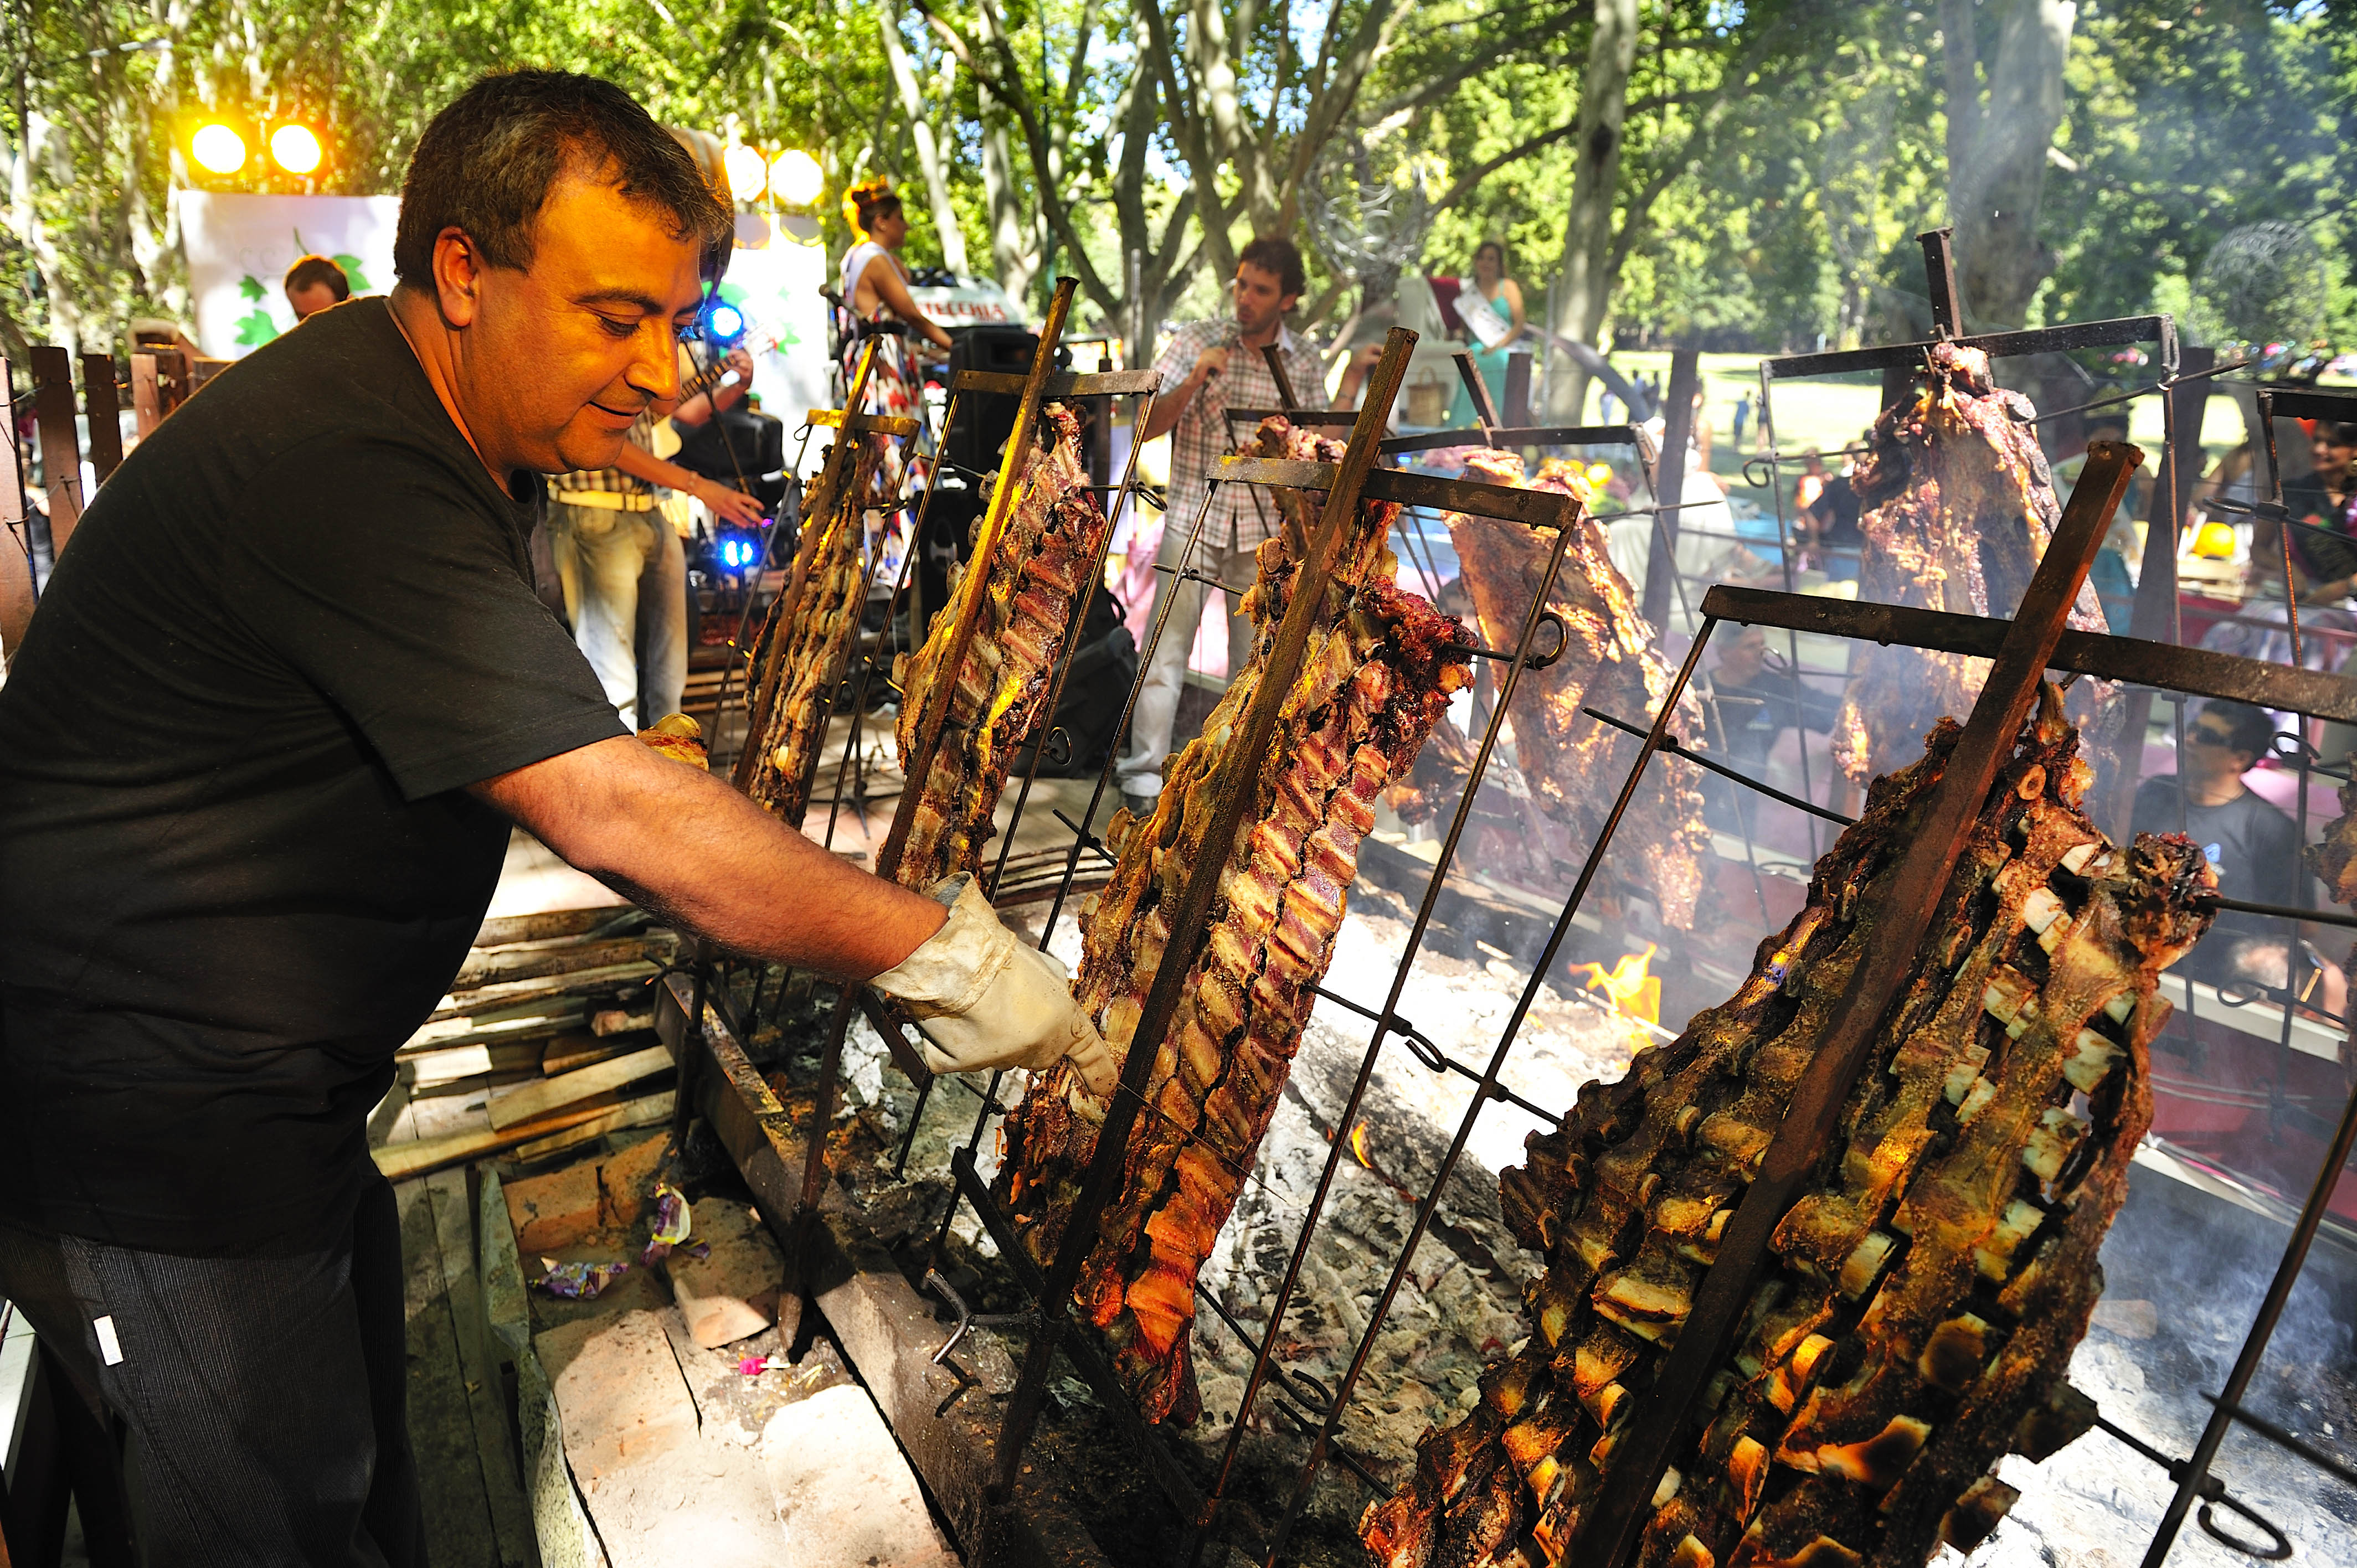 Eat incredible BBQ asado on the streets of Salta | Travel Nation